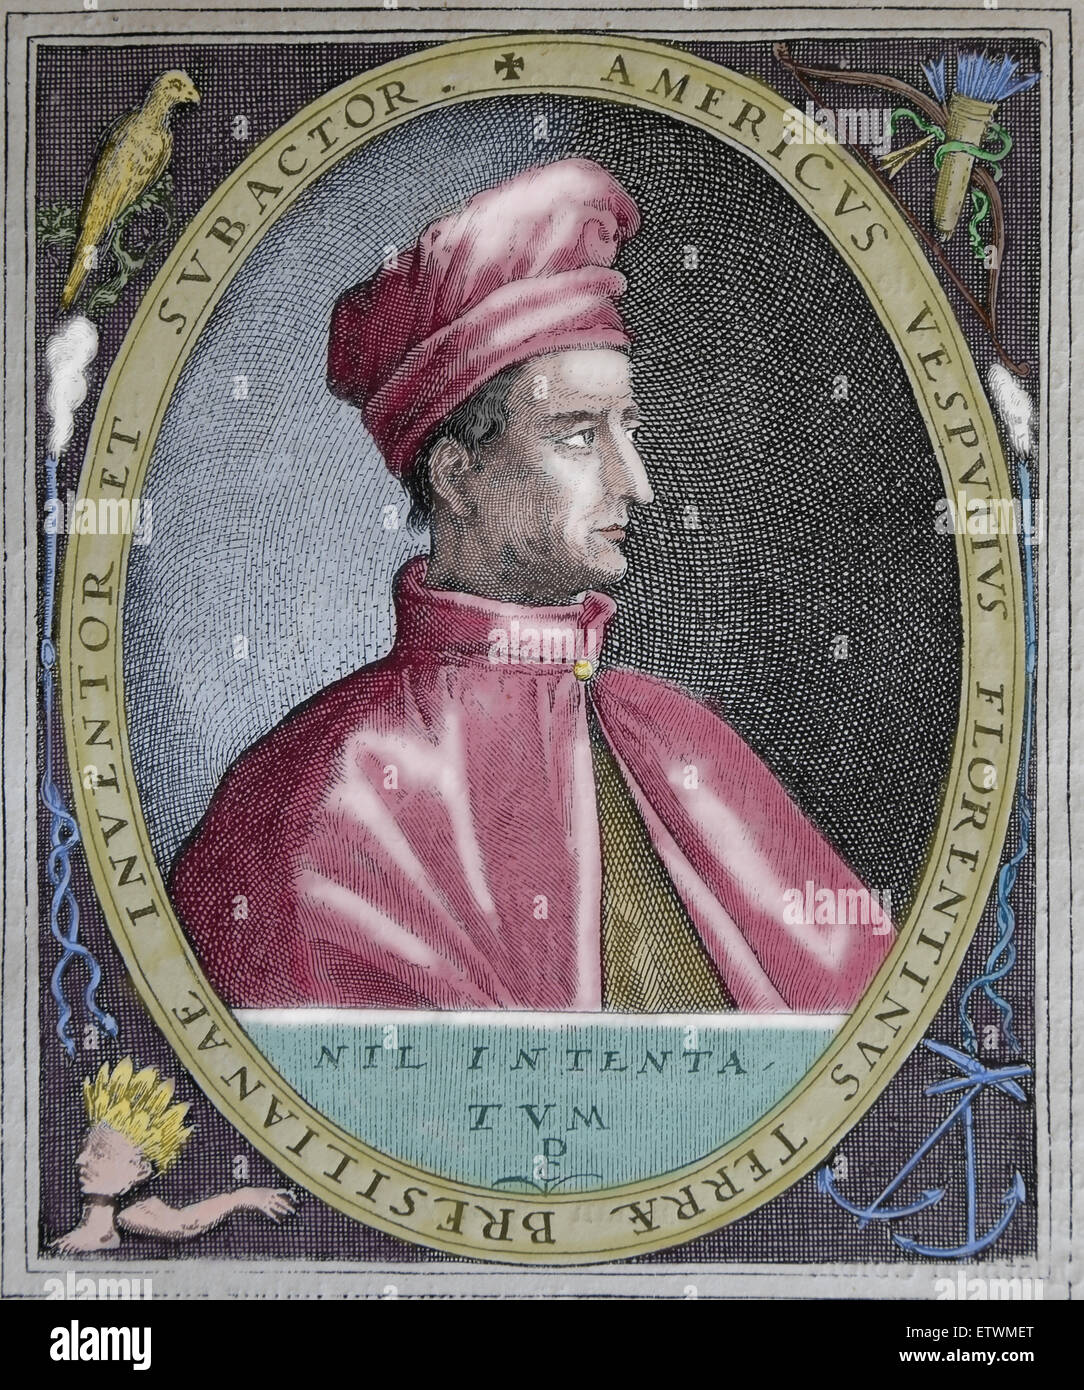 Amerigo Vespucci (1454-1512). Italian explorer, financier, navigator and cartographer. Portrait. Color. Stock Photo